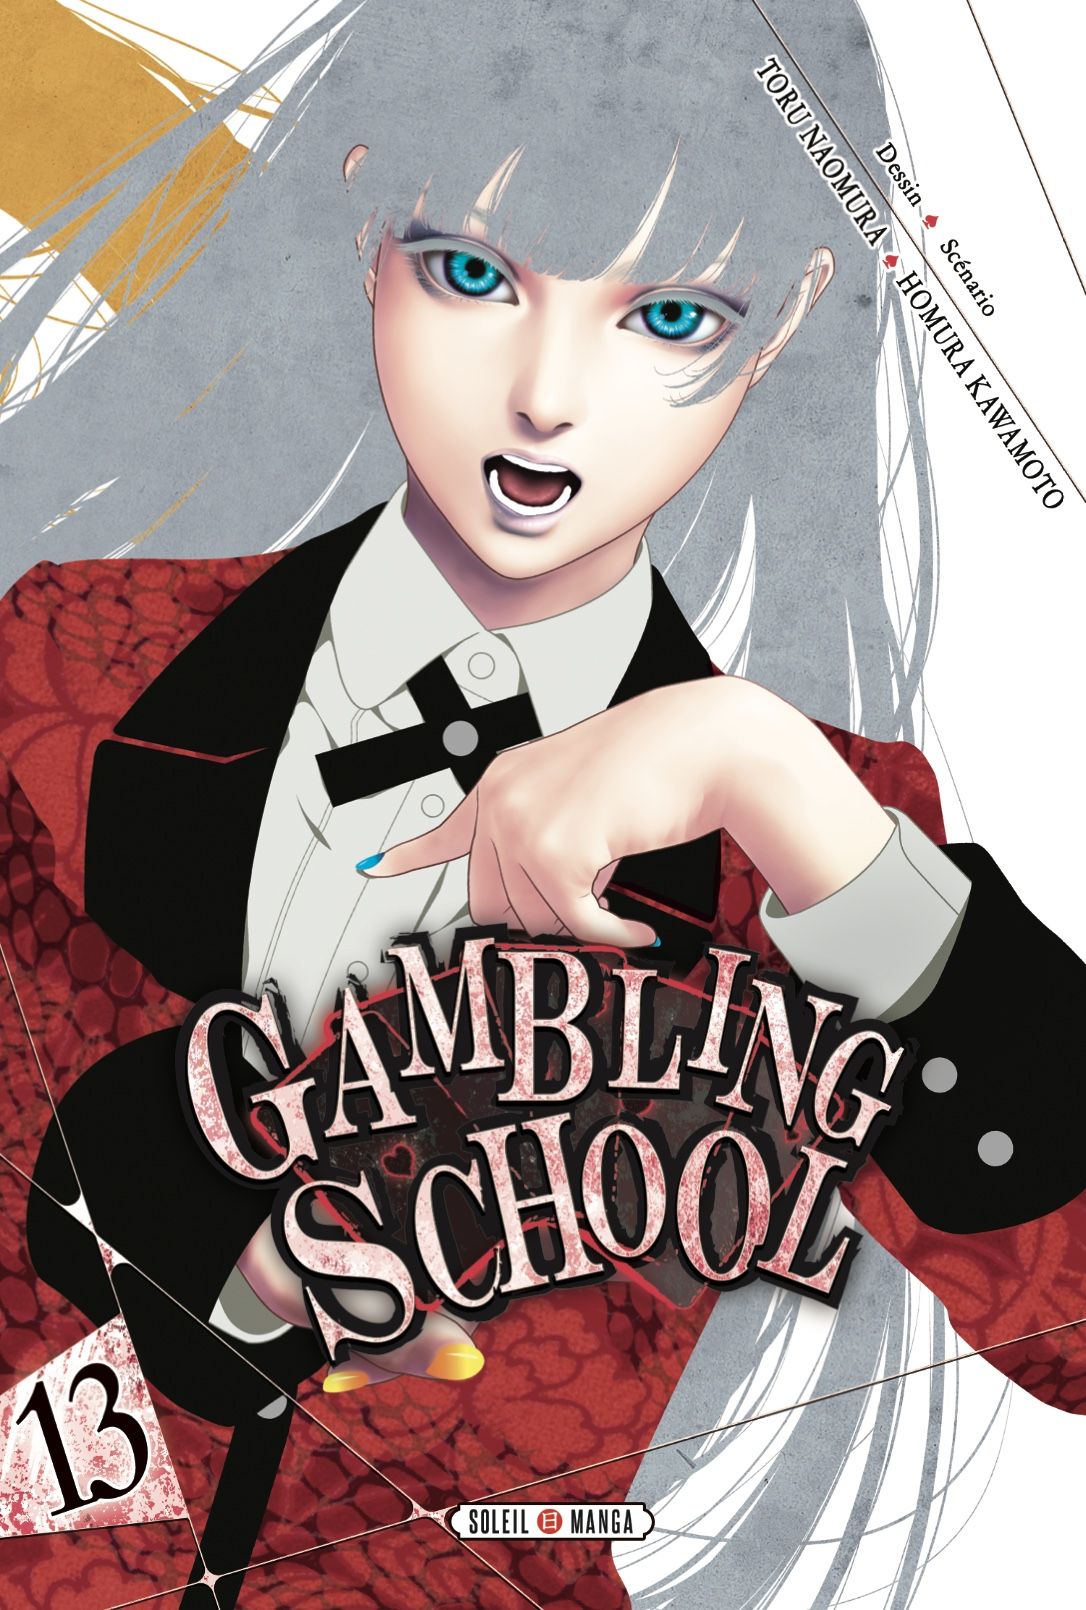 Gambling School Vol.13